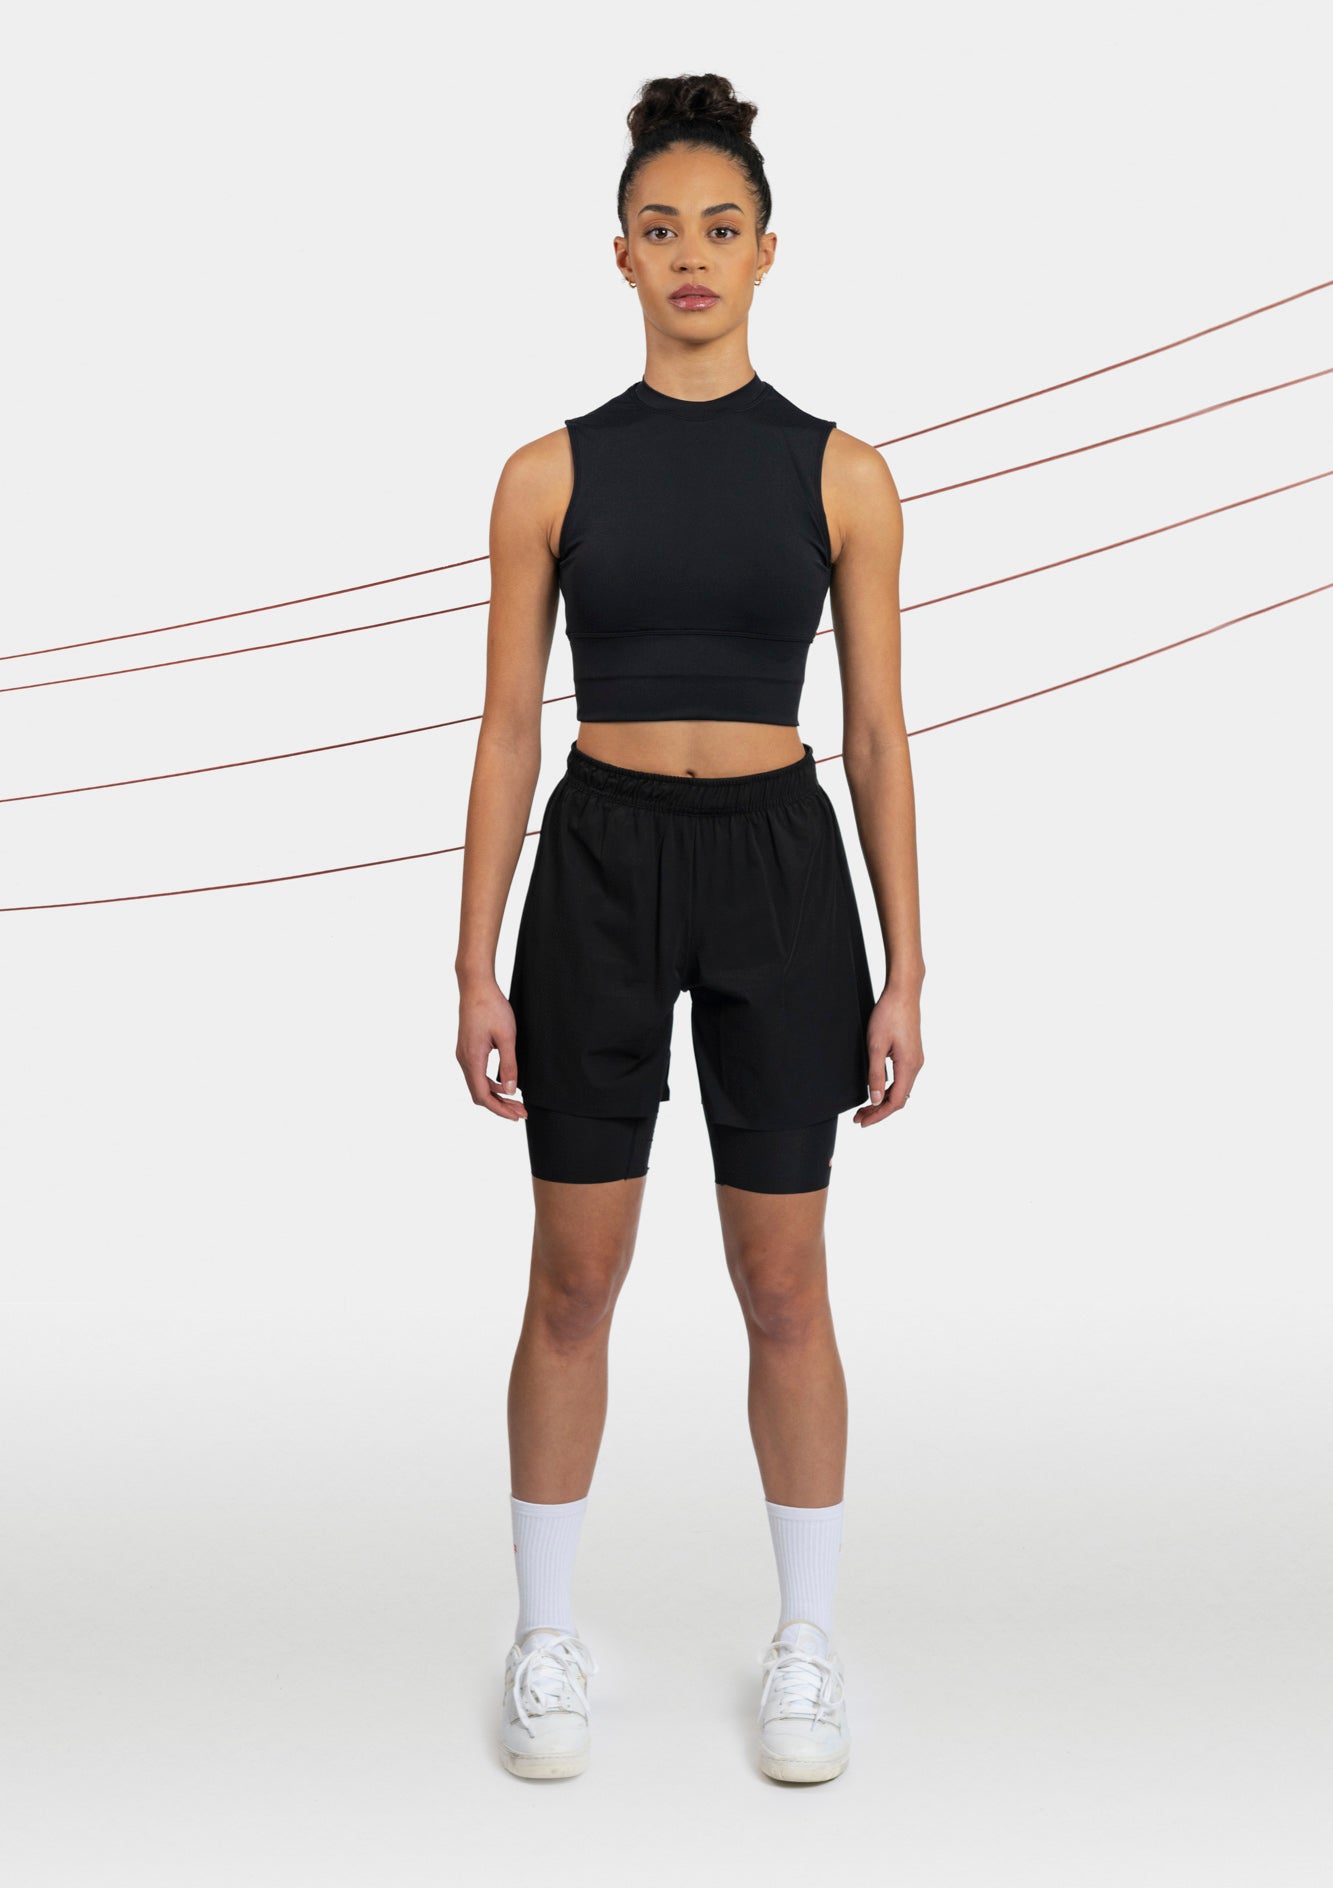 women's black workout shorts front